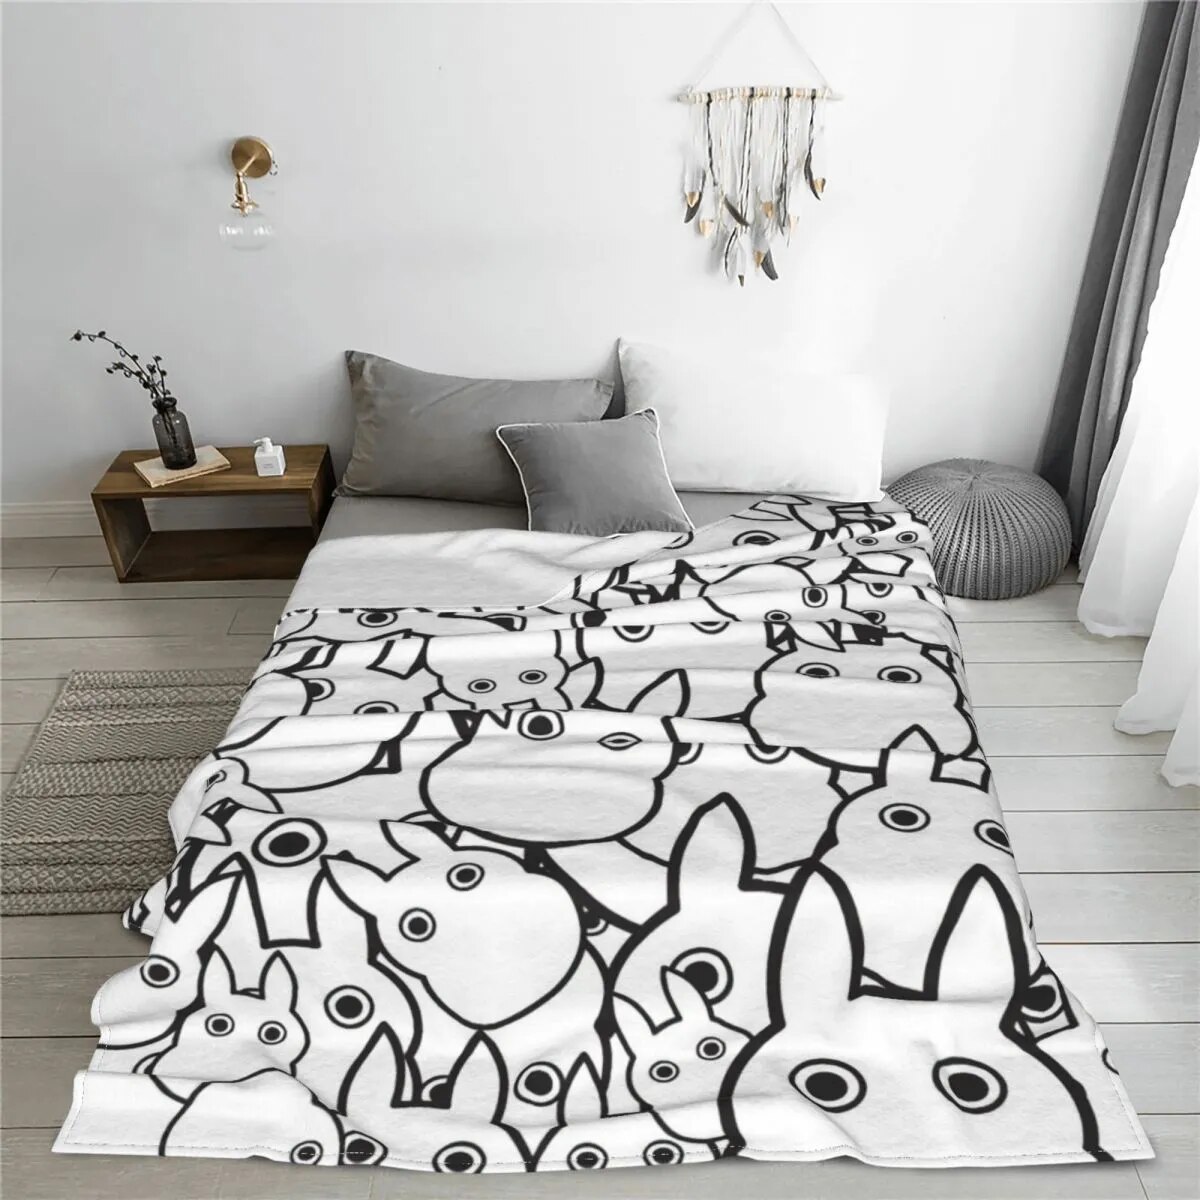 Cute Totoro Studio Ghibli Coral Fleece Plush Throw Blankets Miyazaki Hayao Anime Blanket for Home Couch 1 - Ghibli Plush